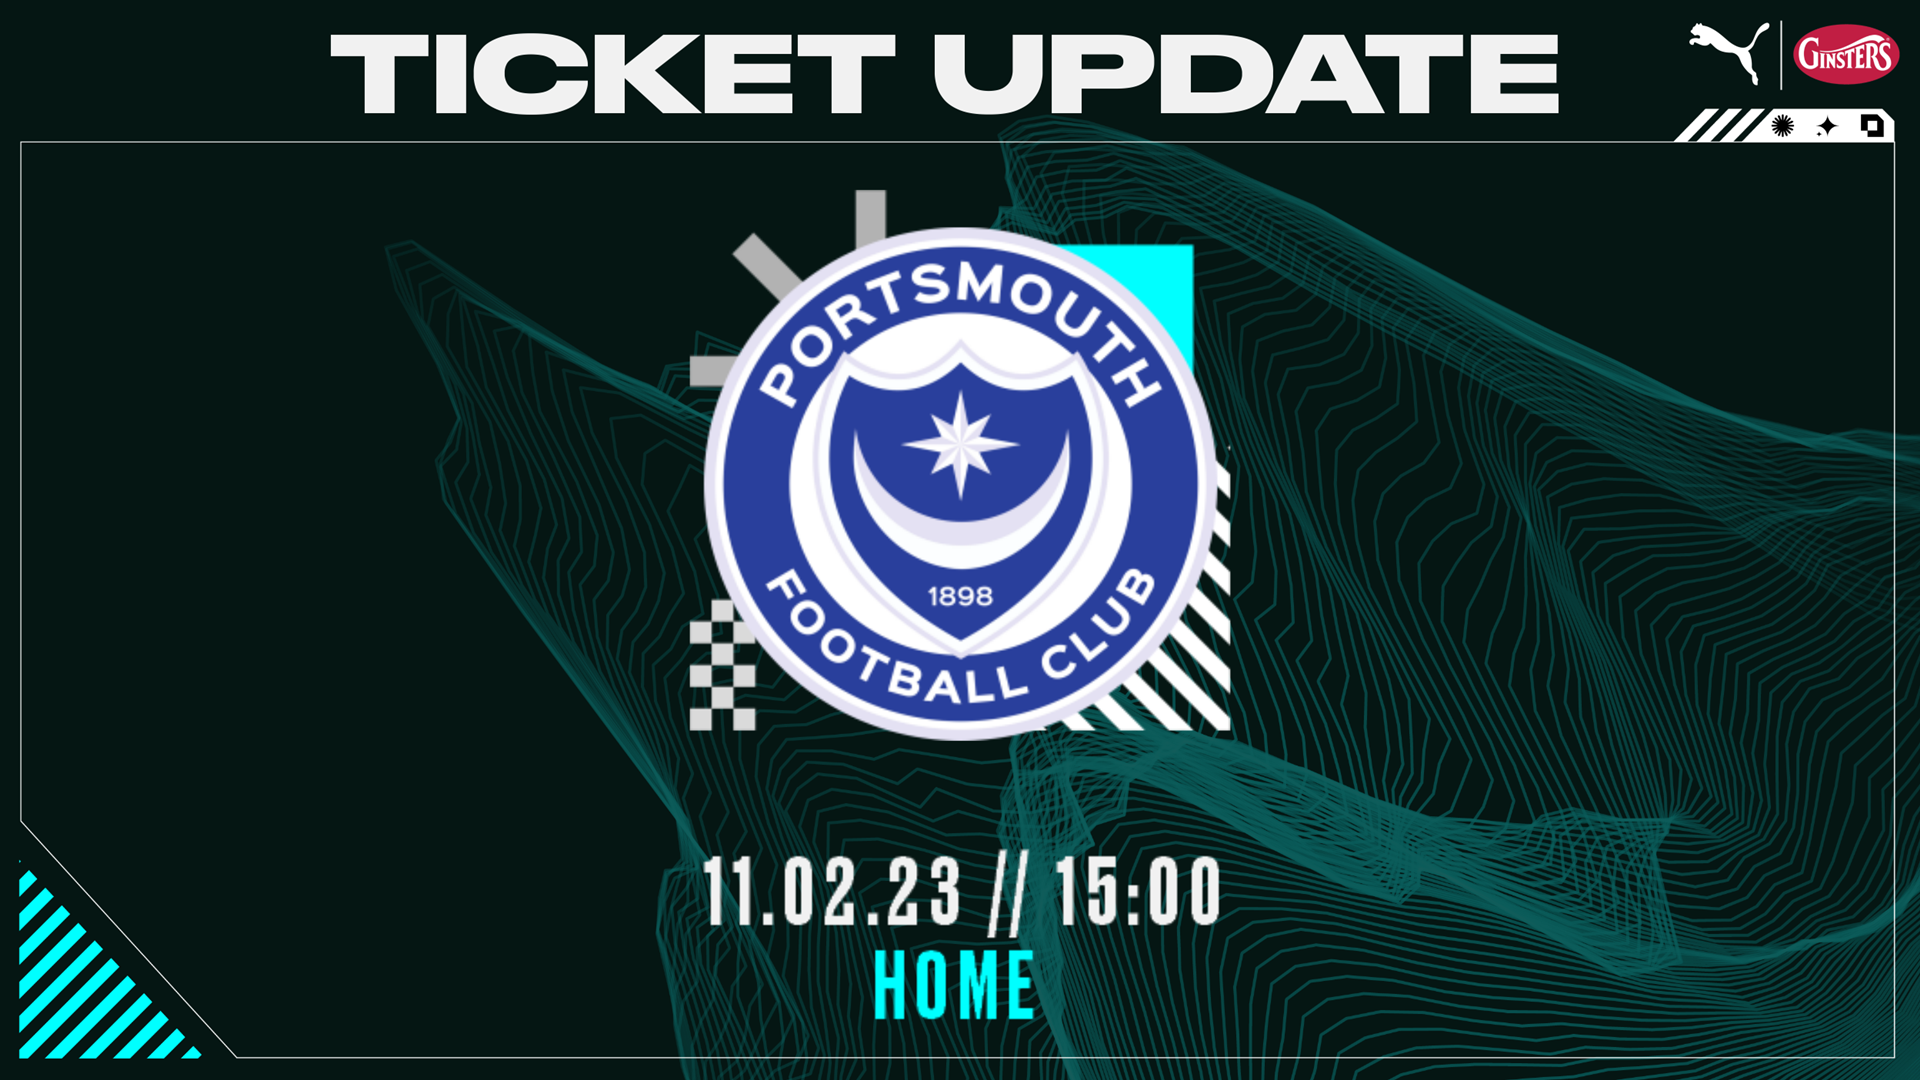 Portsmouth Tickets